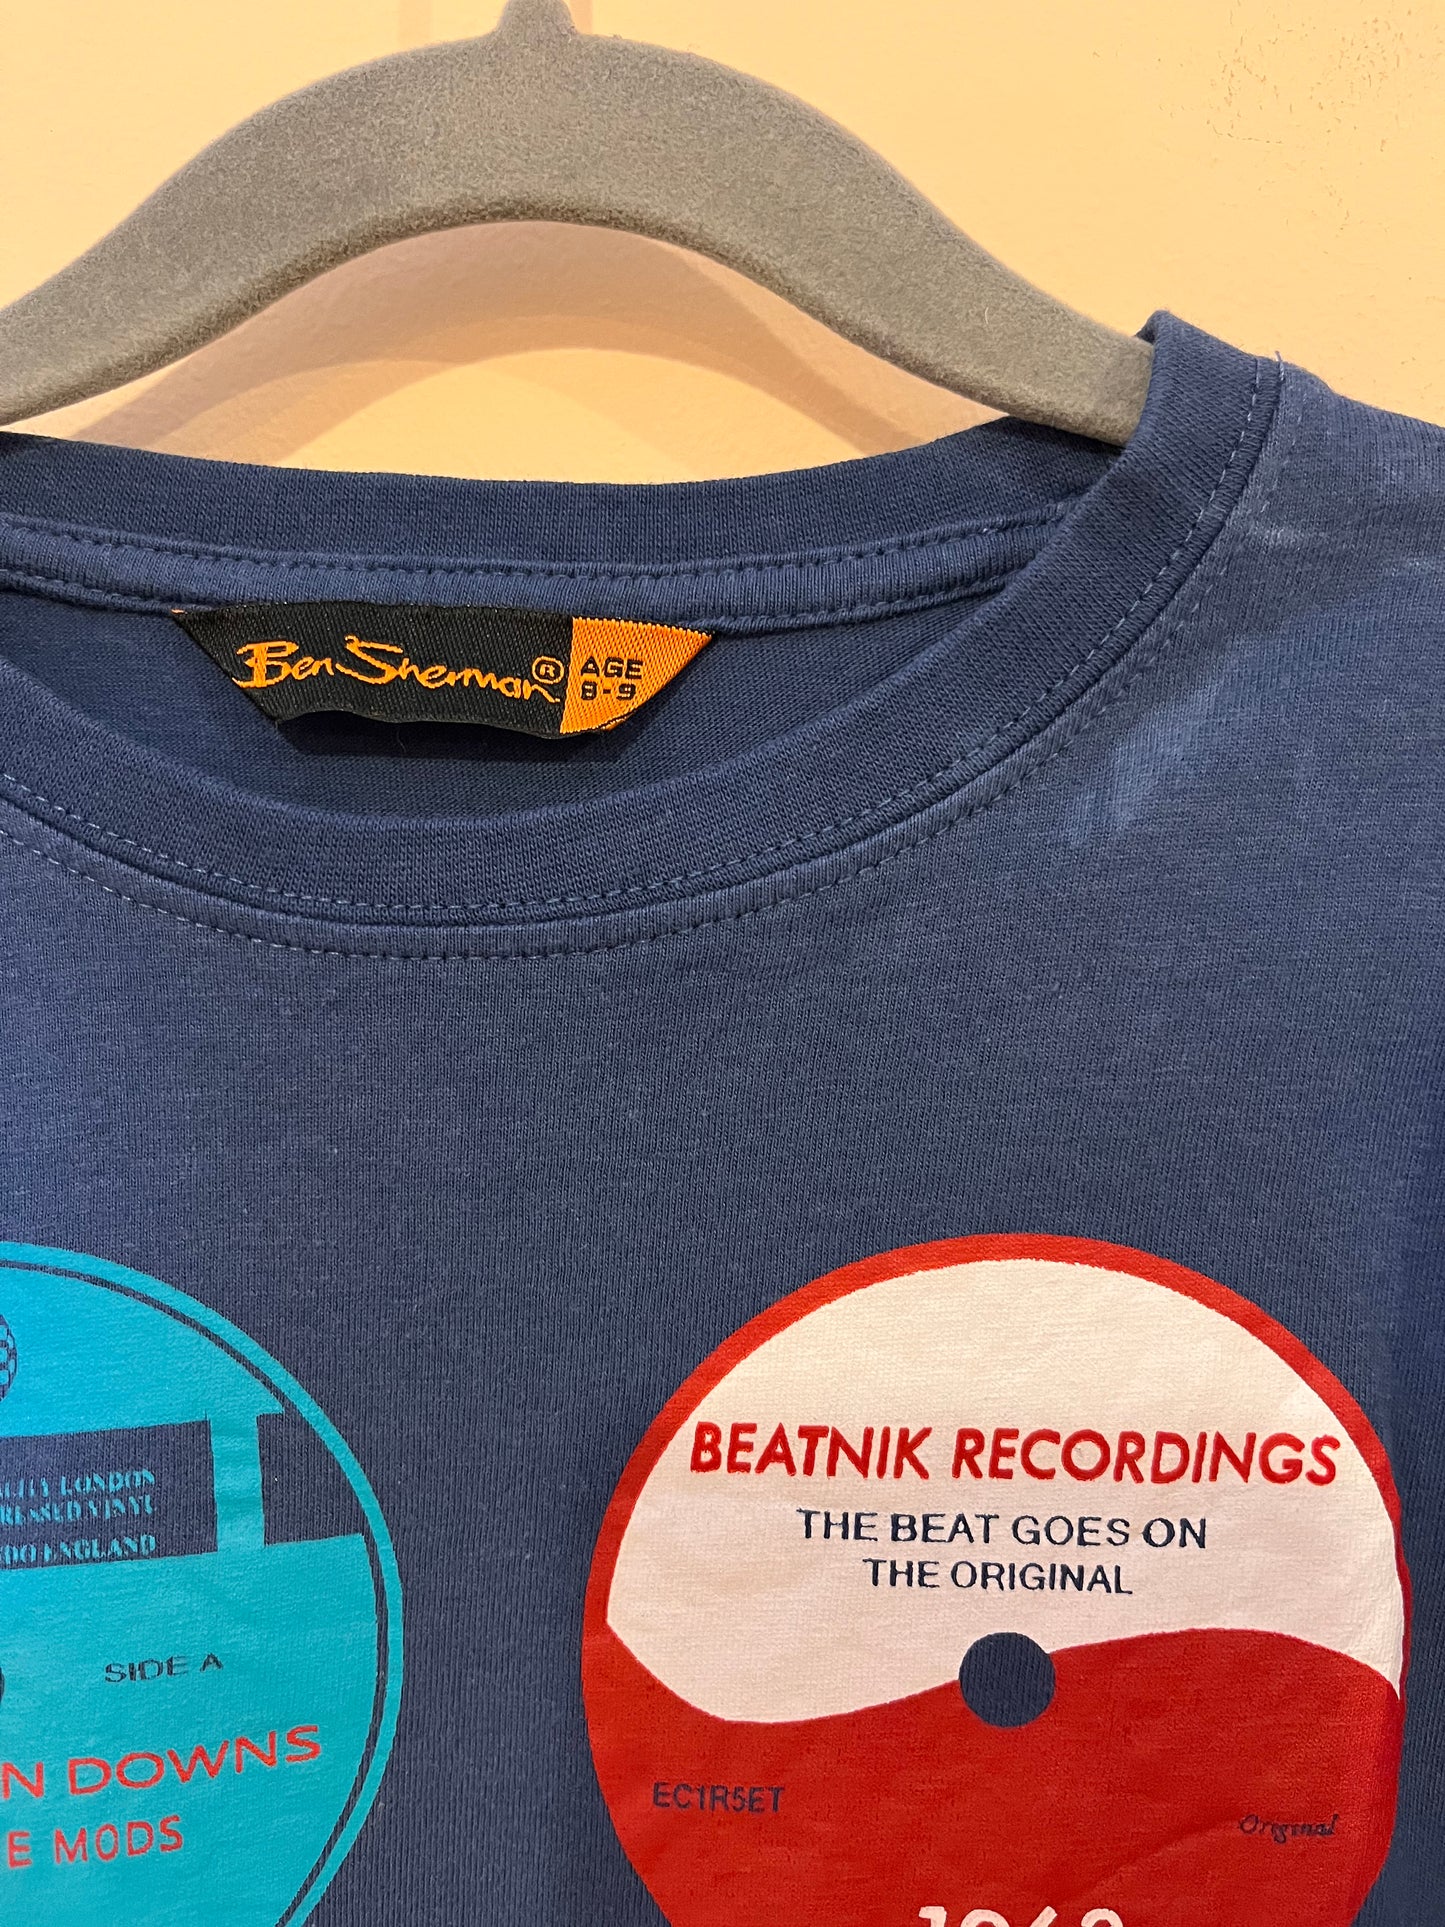 Ben Sherman Records T-Shirt (8-9)